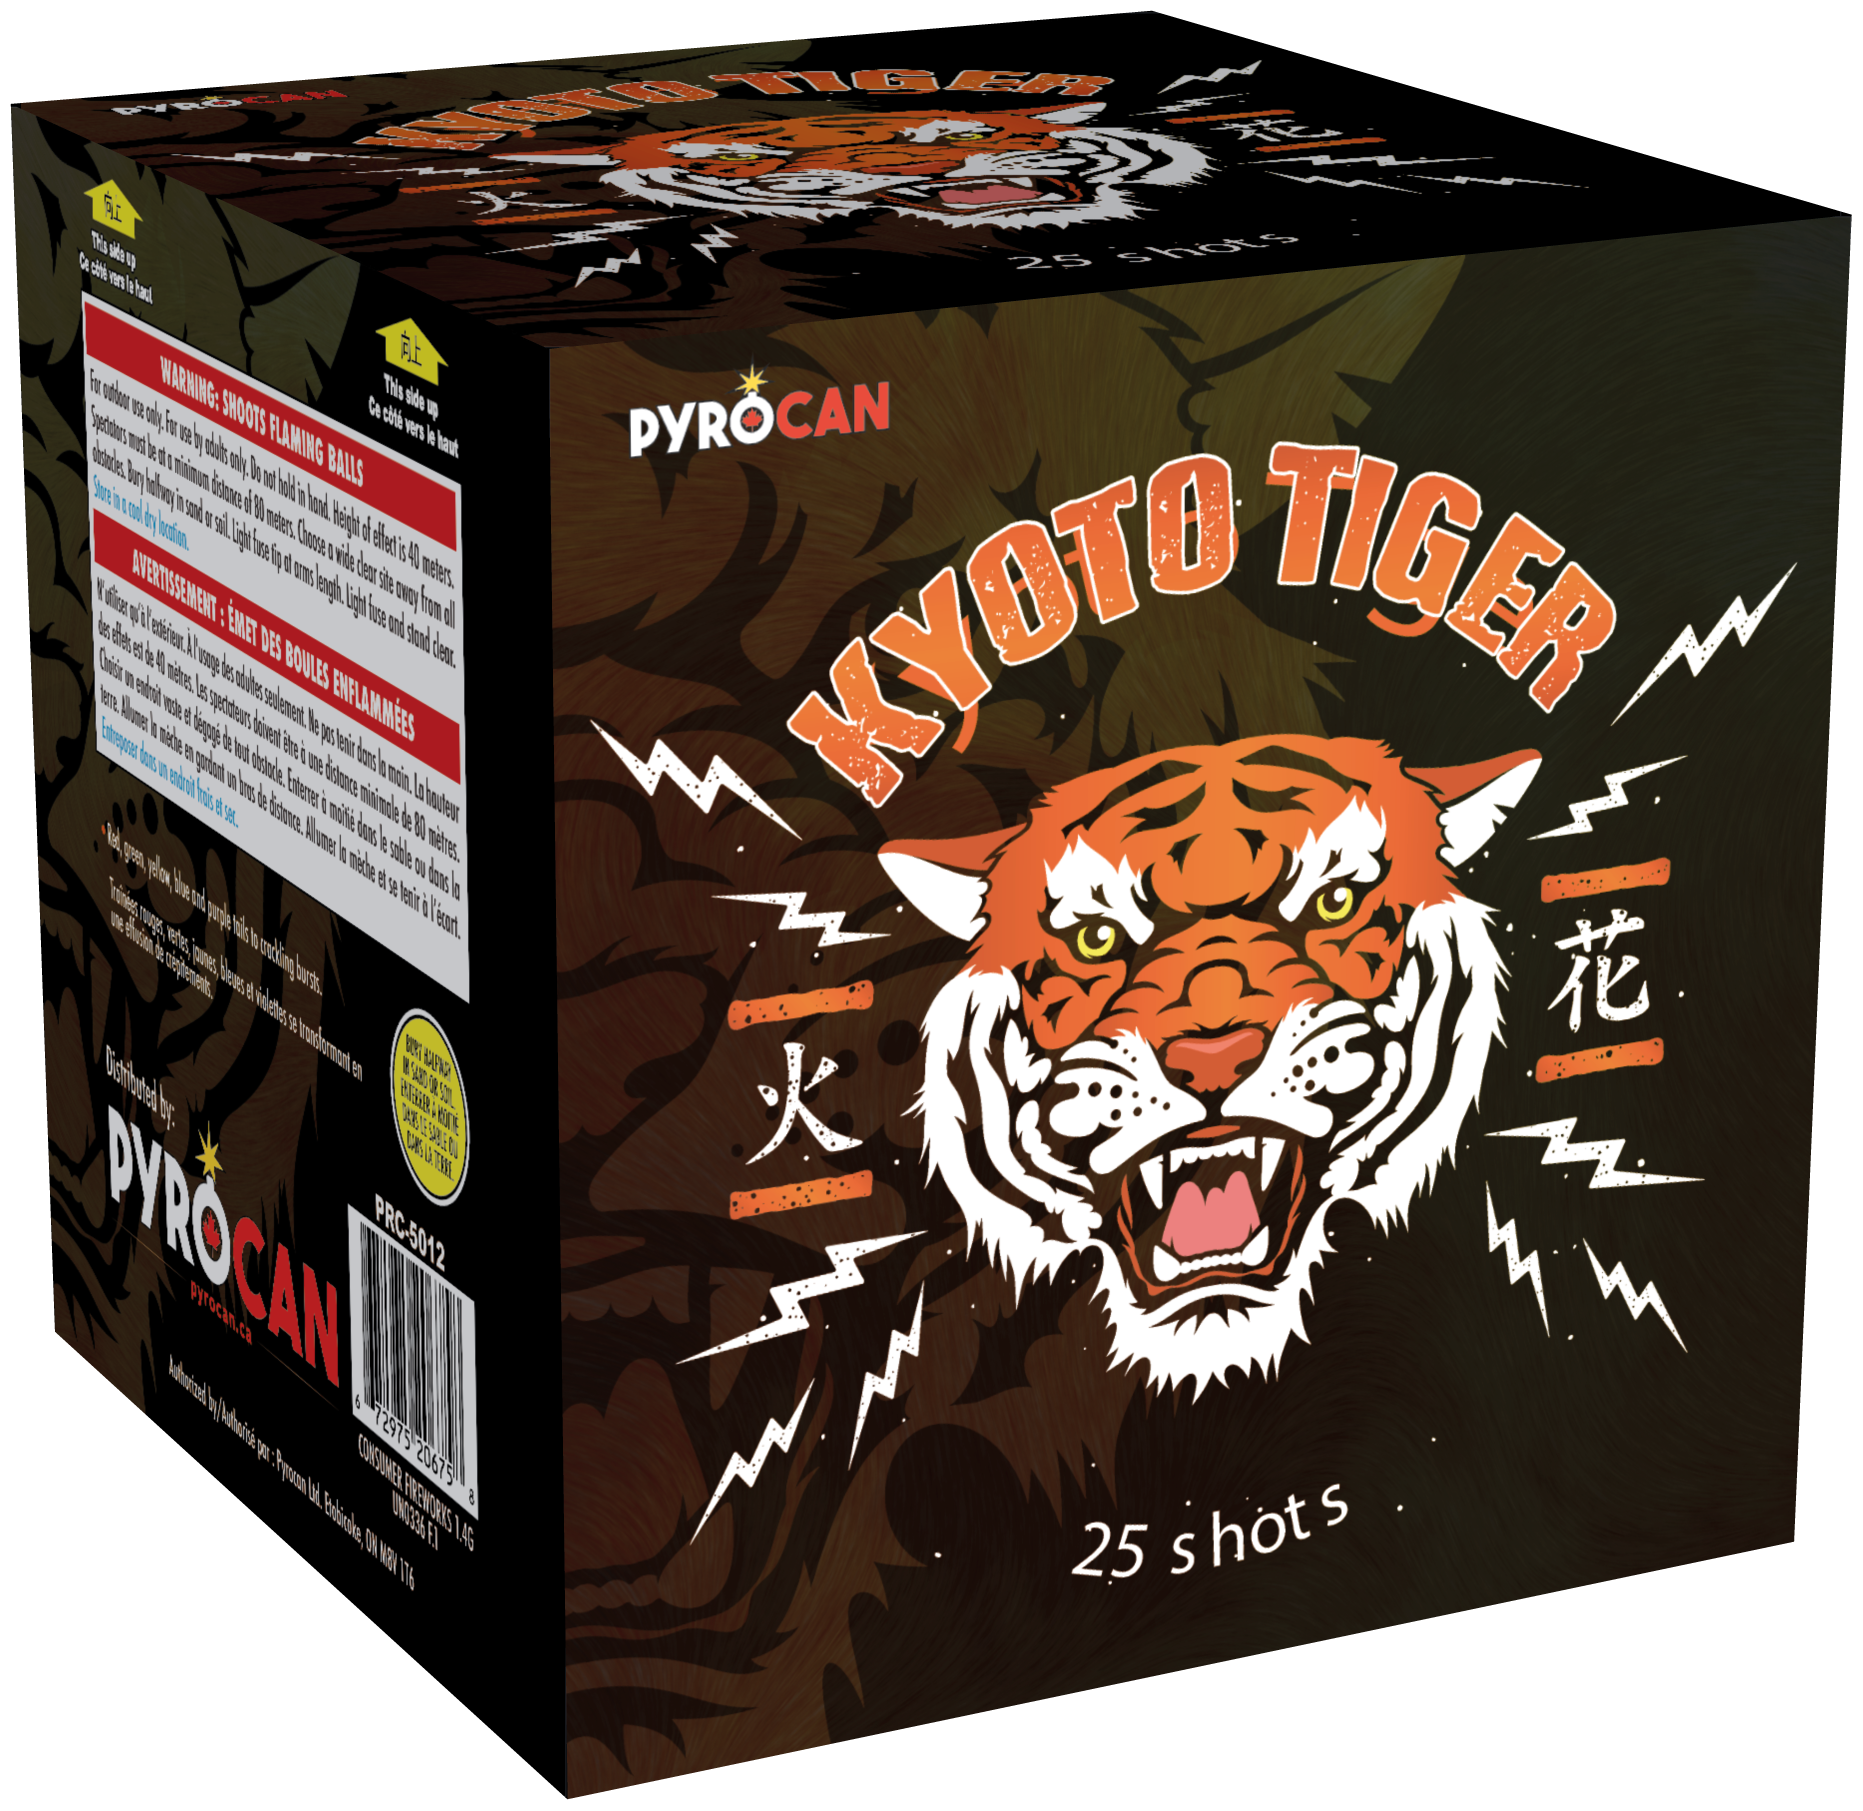 Buy Kyoto-Tiger-Cake at Rocket Fireworks Canada